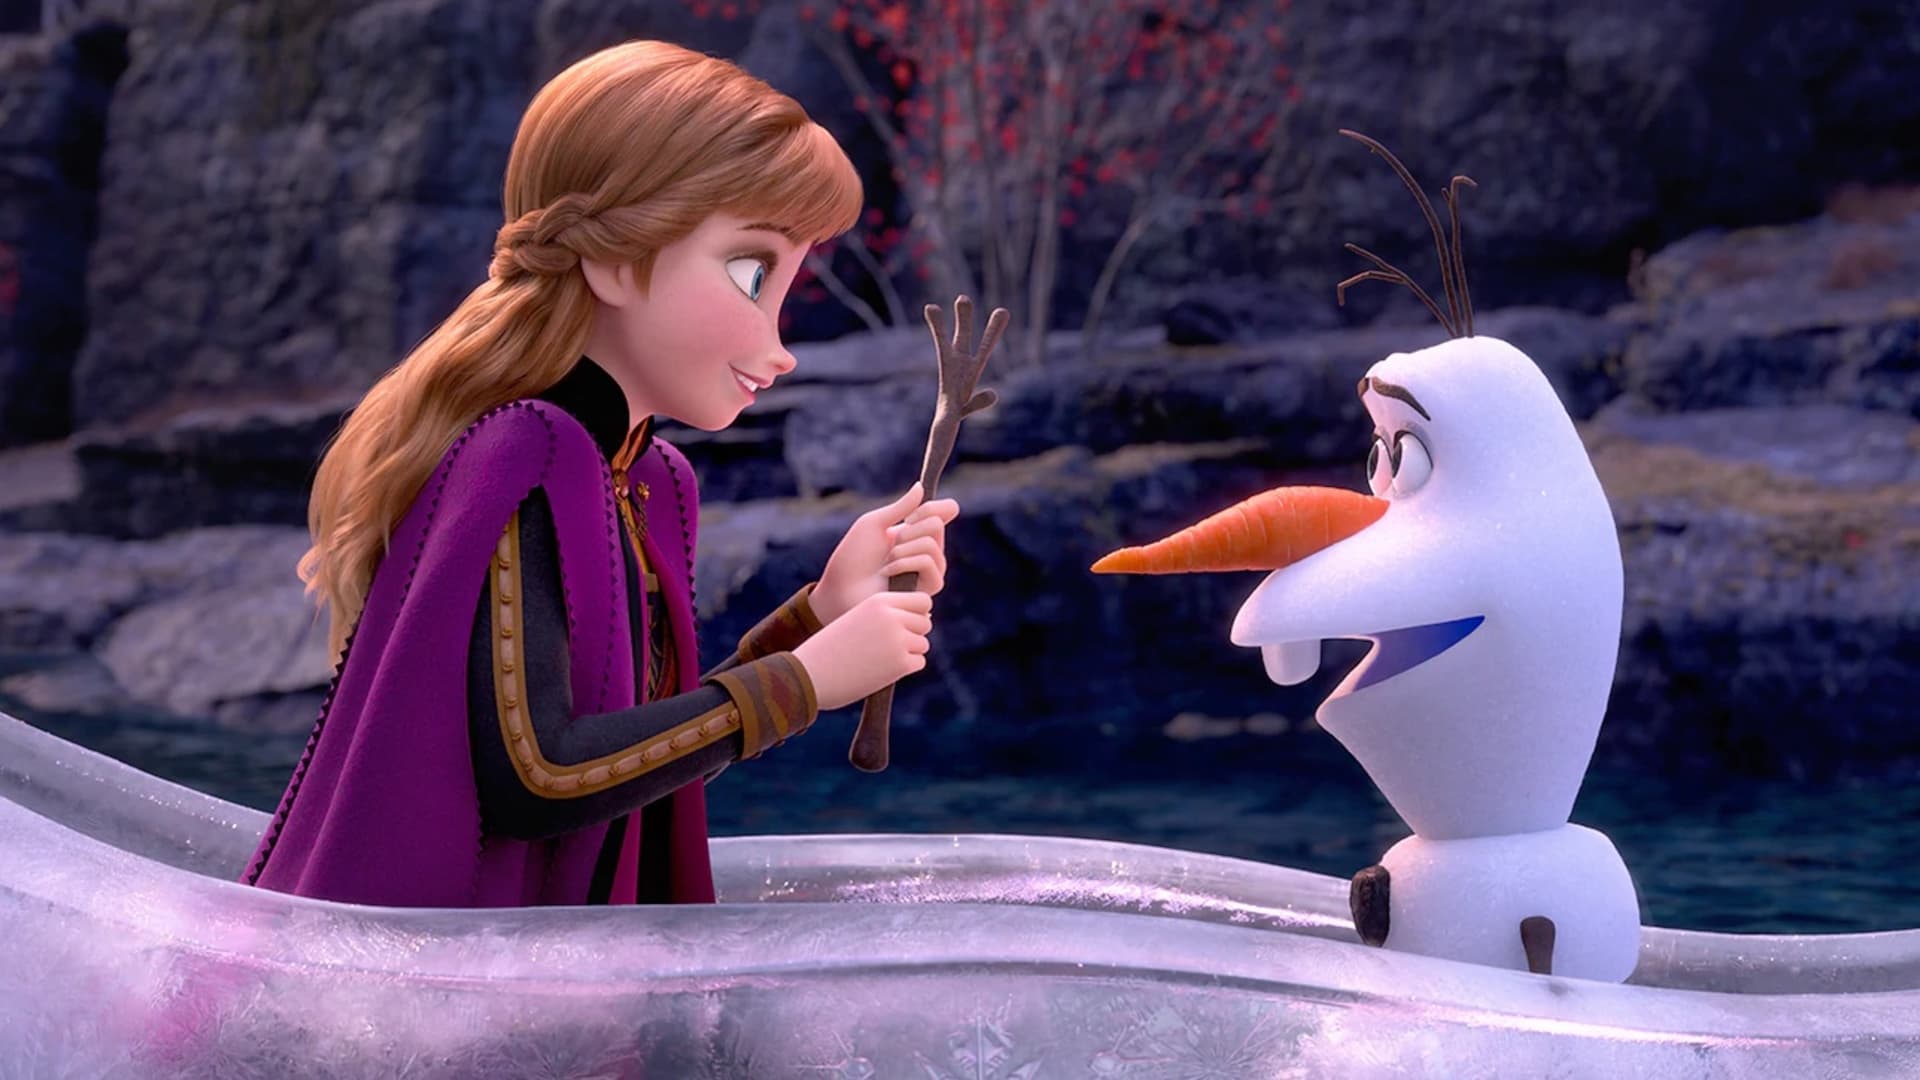 Rough sleep on behalf of Stadium Frozen 2' poised to be Disney's 6th billion-dollar film of 2019